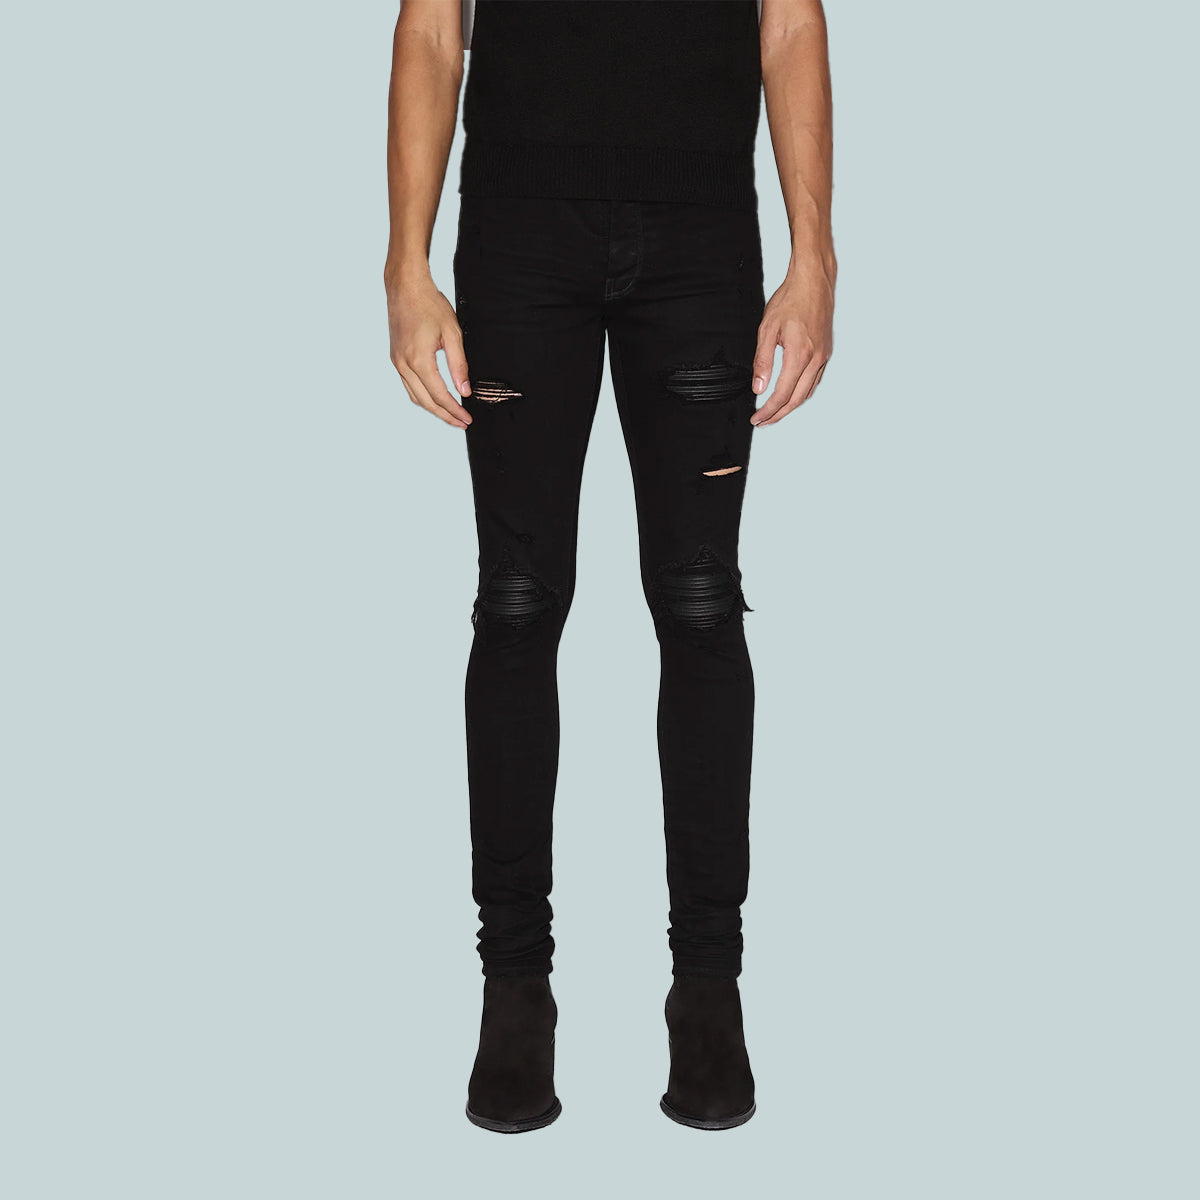 MX1 Jeans Black Leather